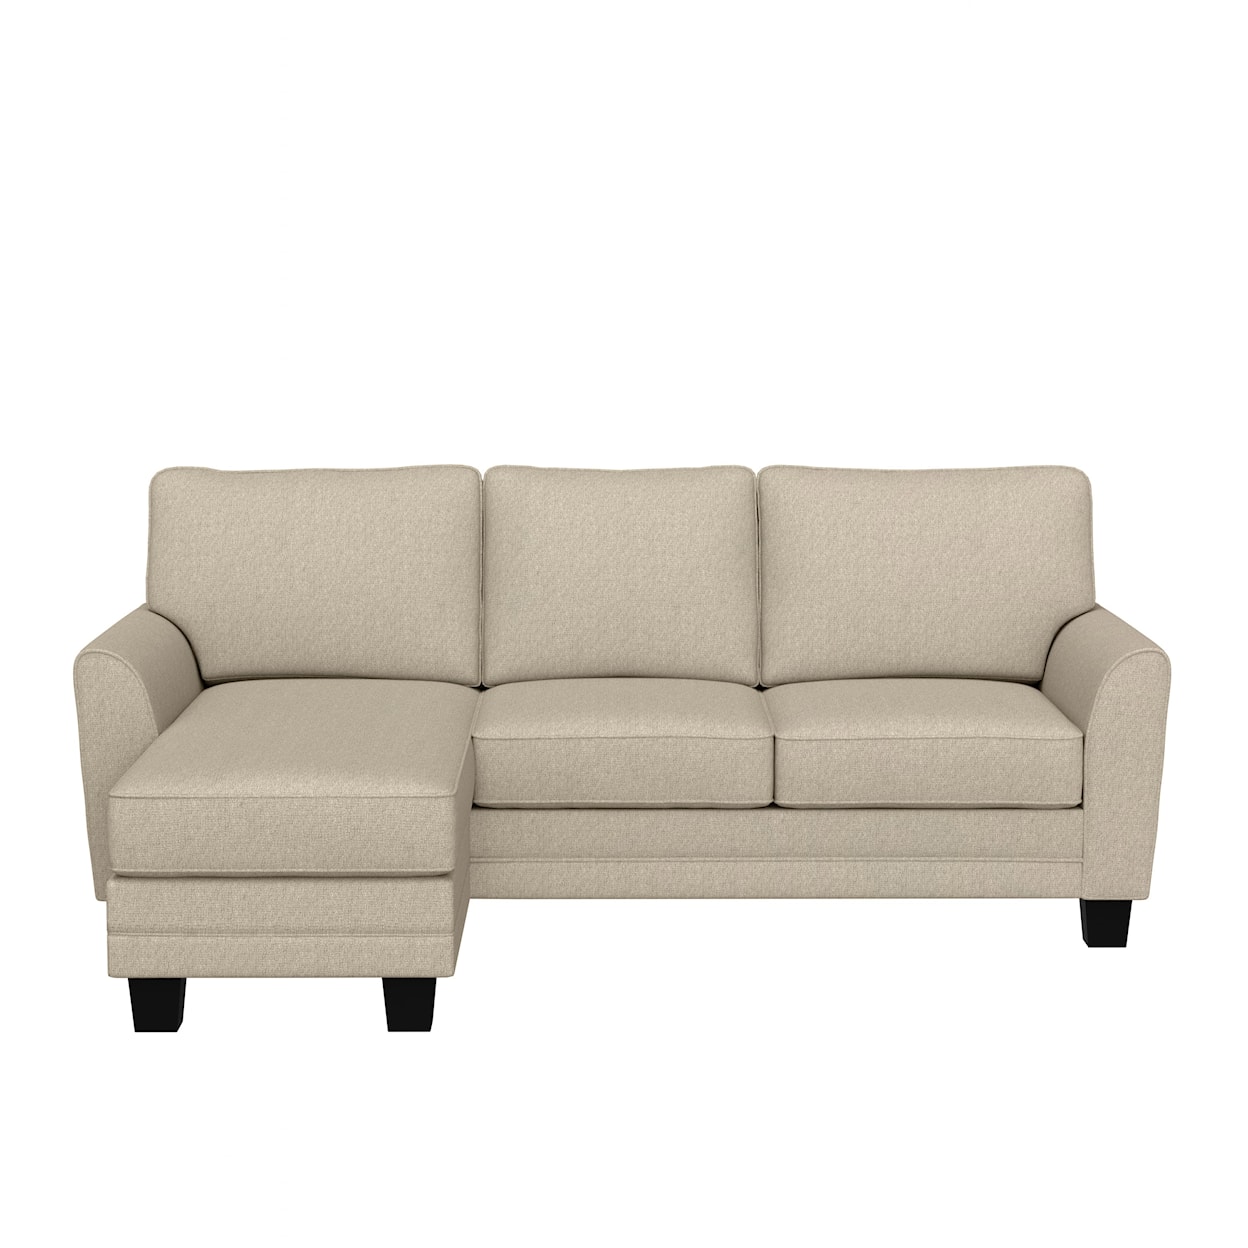 Hillsdale Daniel Sectional Sofa